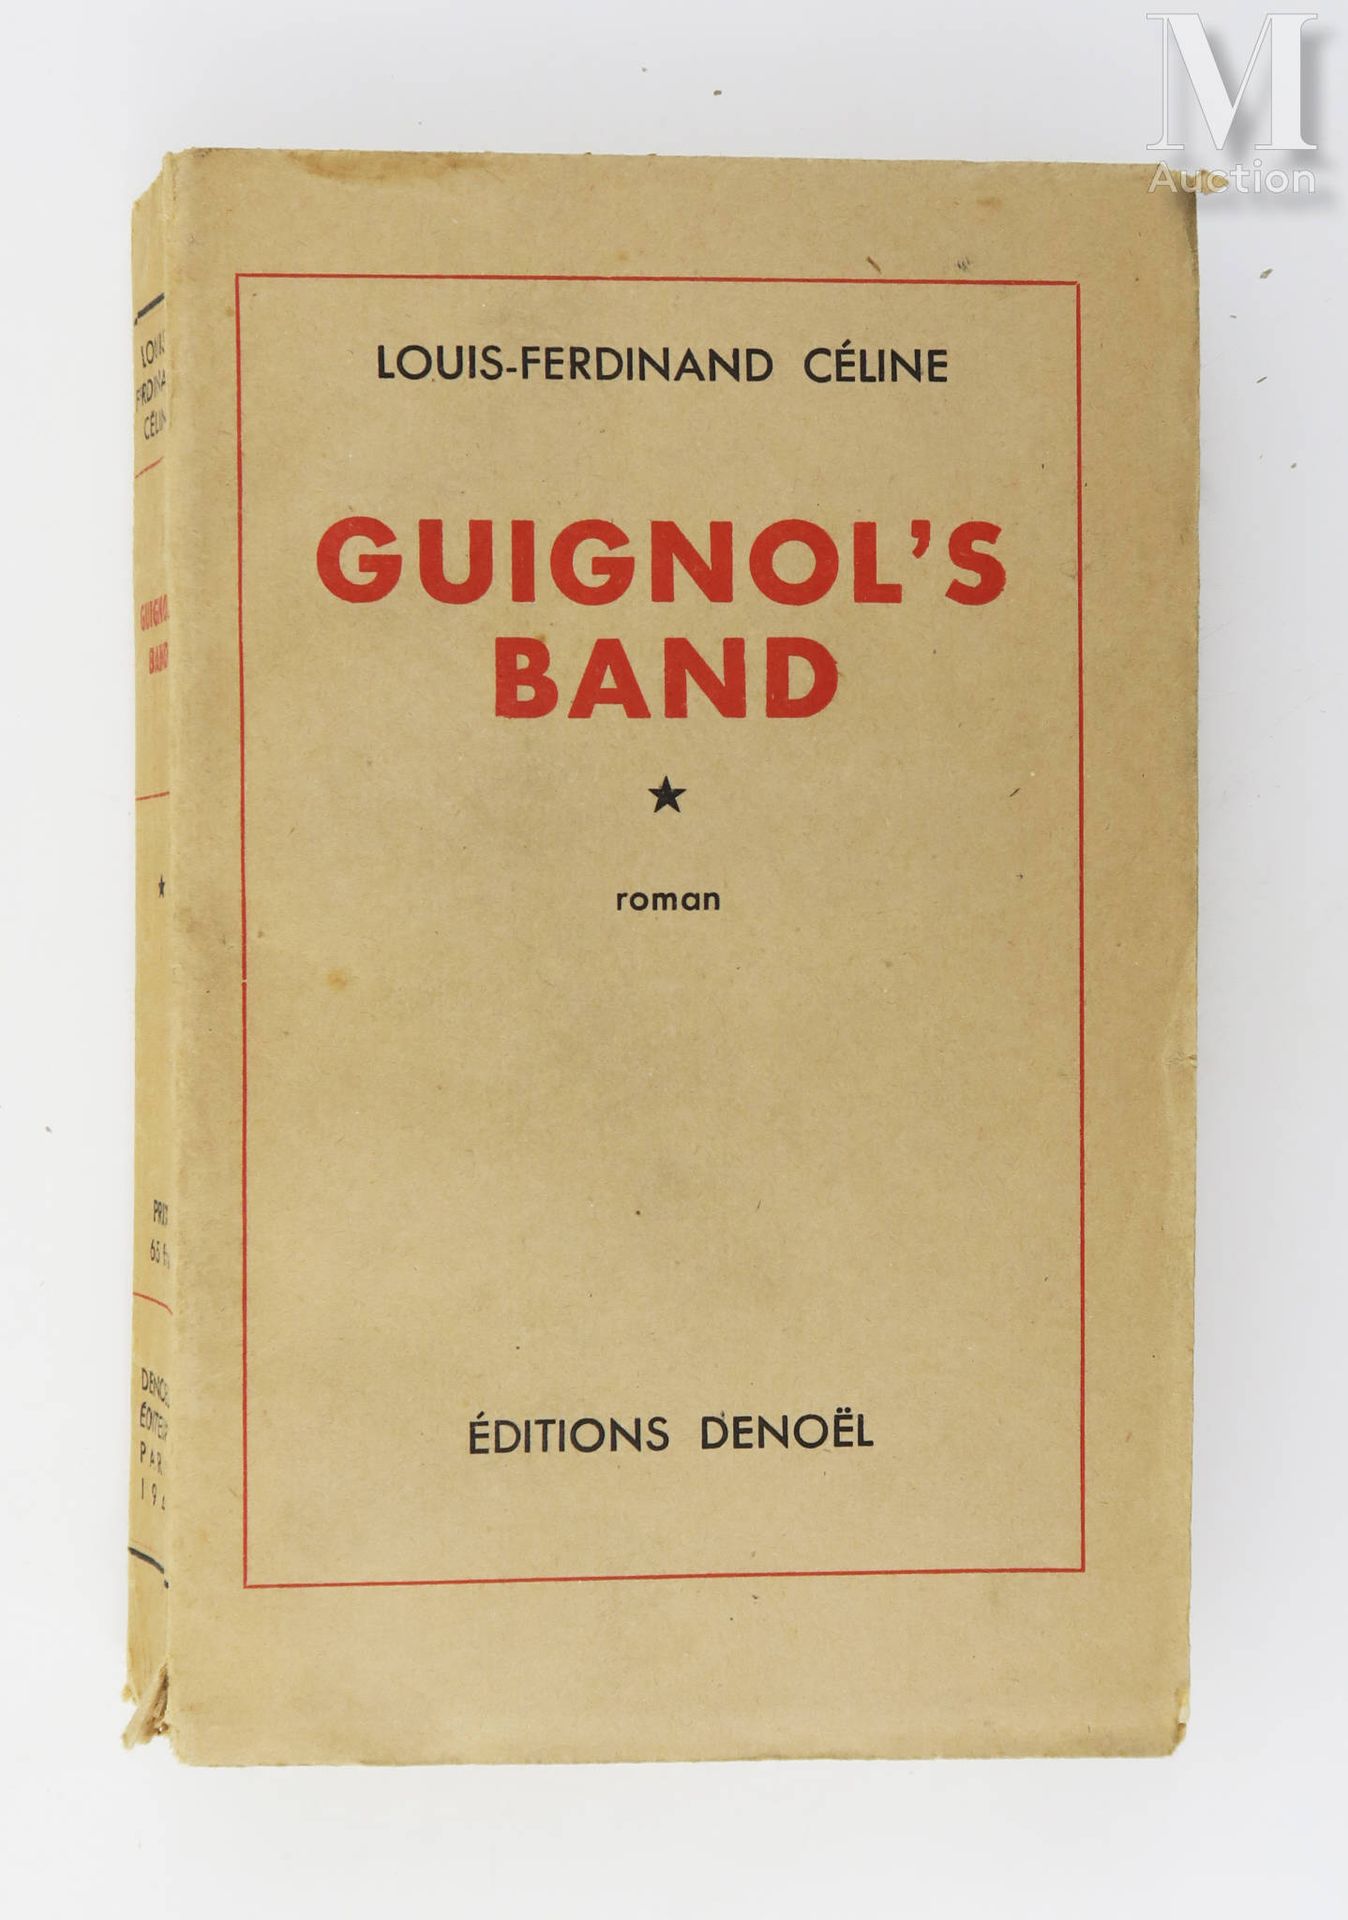 CÉLINE (Louis-Ferdinand). Guignol's band. Paris, Denoël, 1944.

In-8 paperback, &hellip;